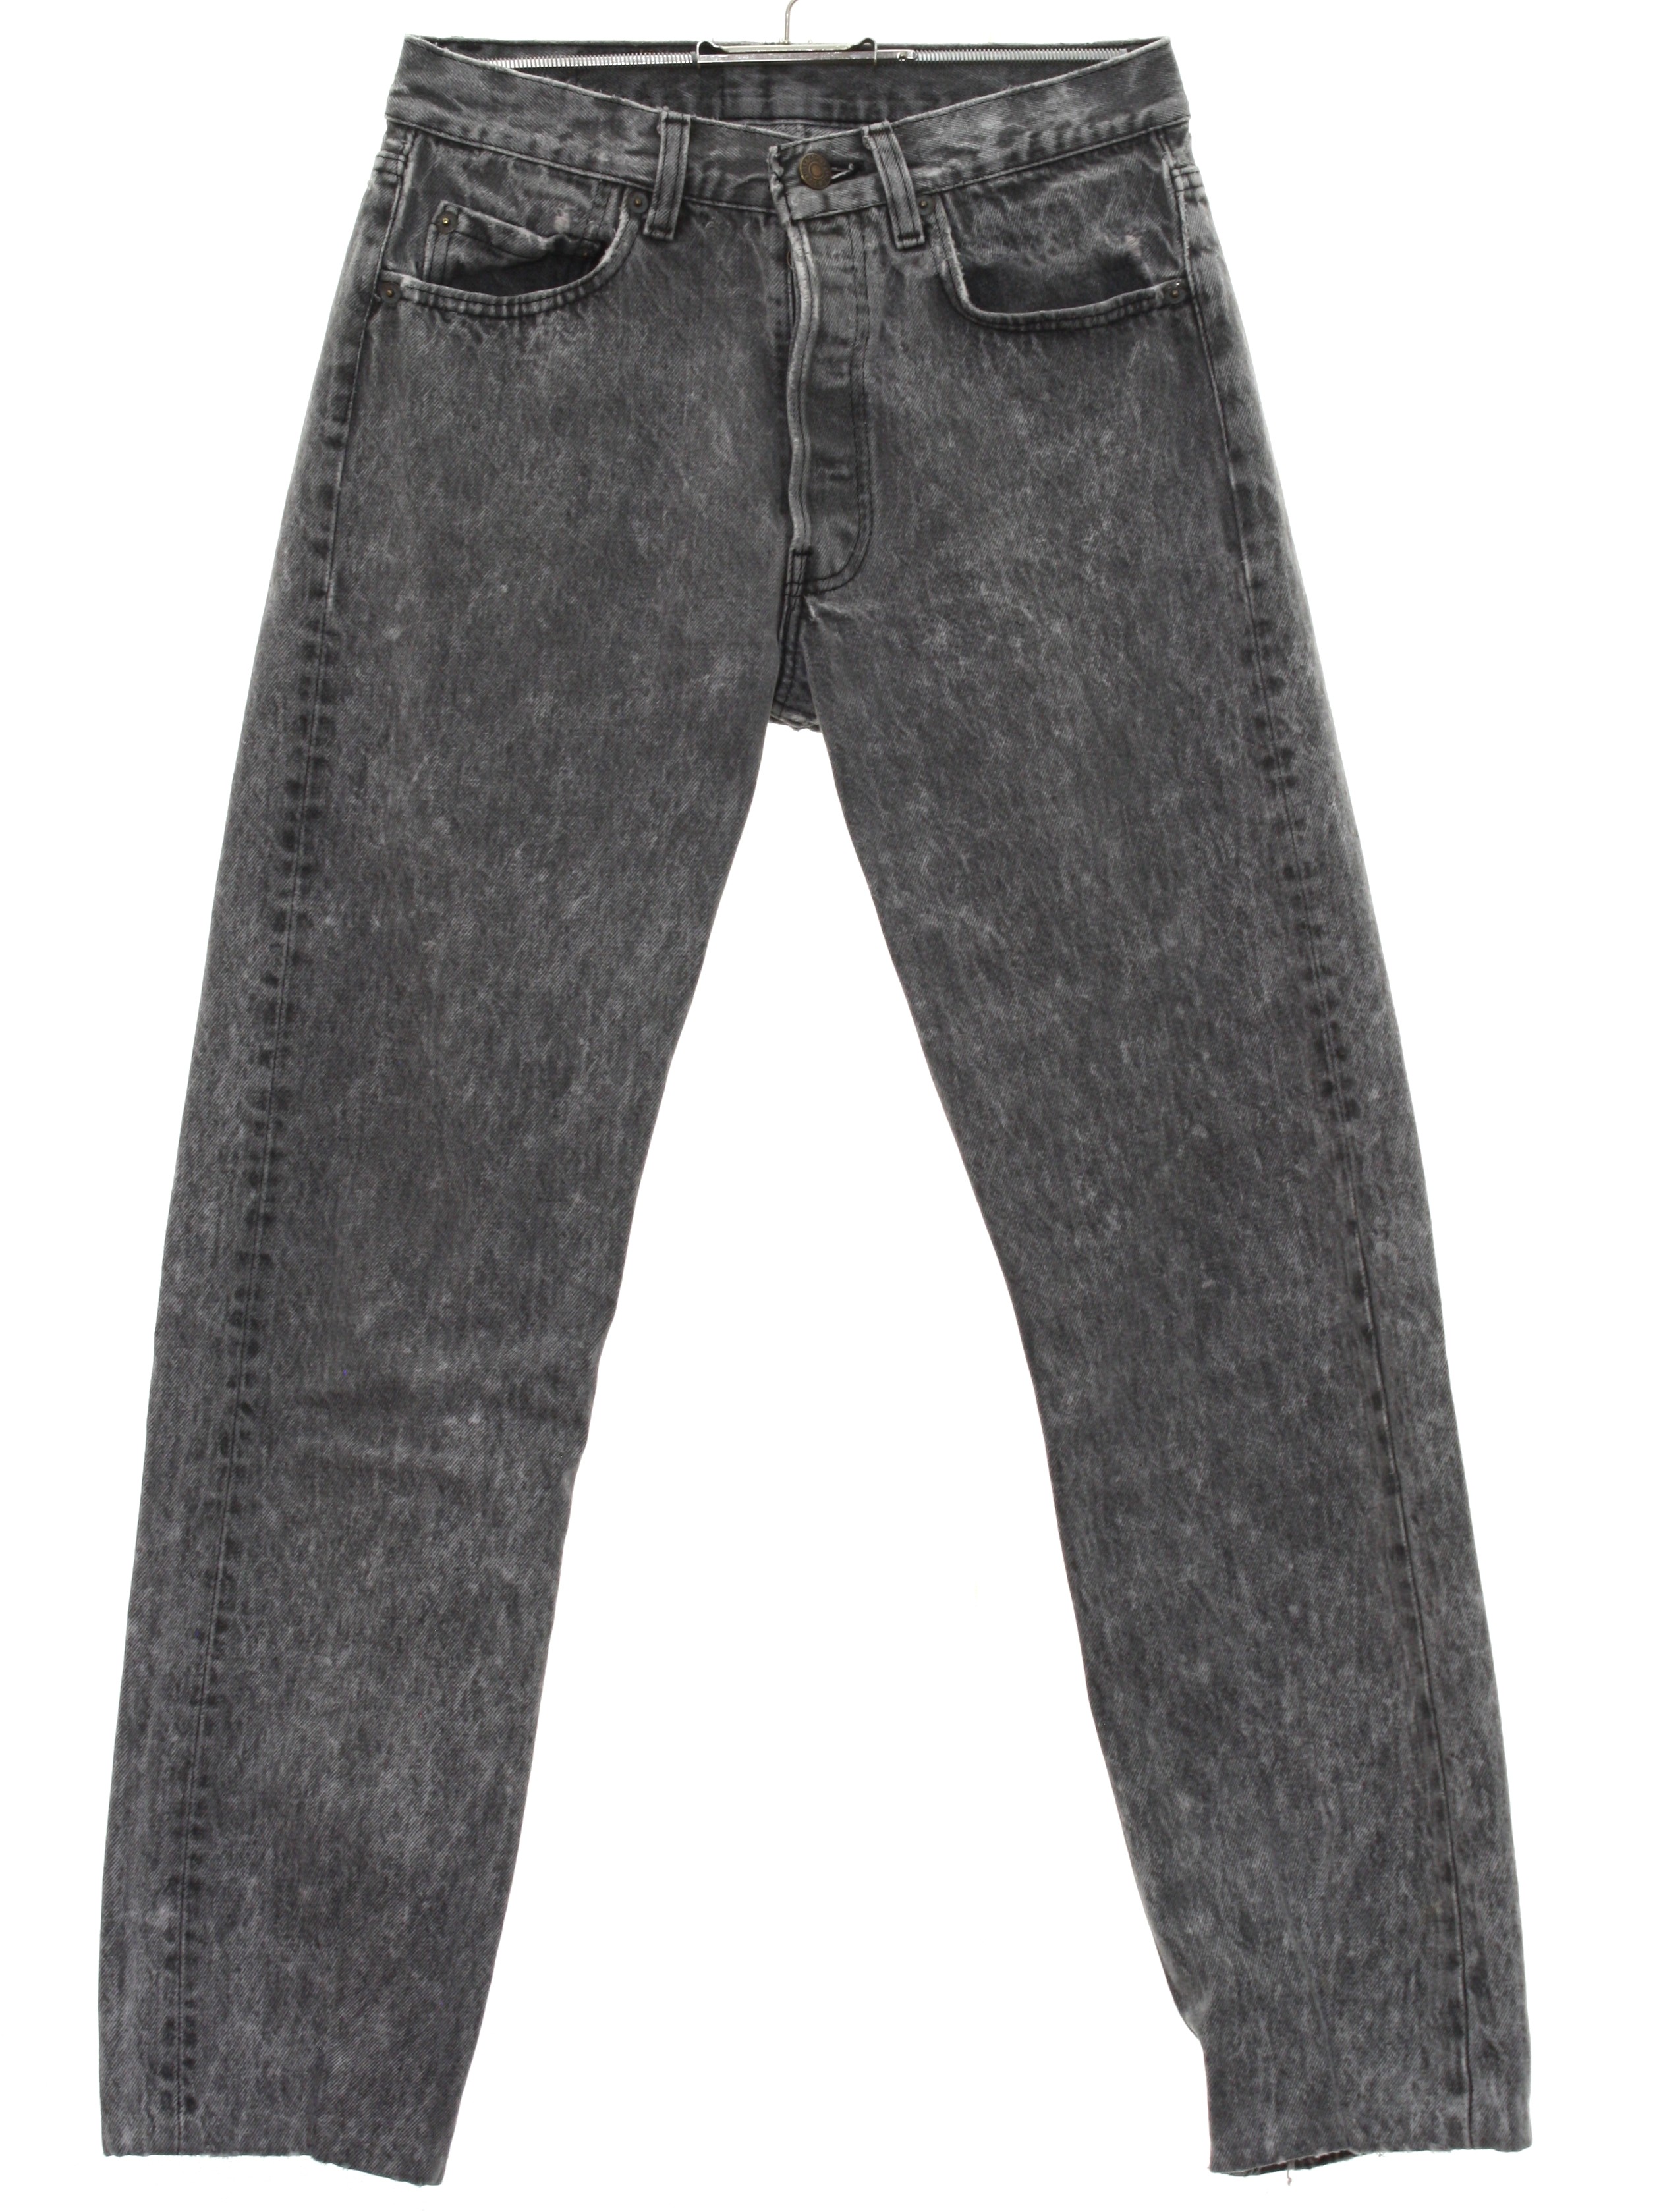 Vintage Levis 501 Eighties Pants: 80s -Levis 501- Mens acid washed